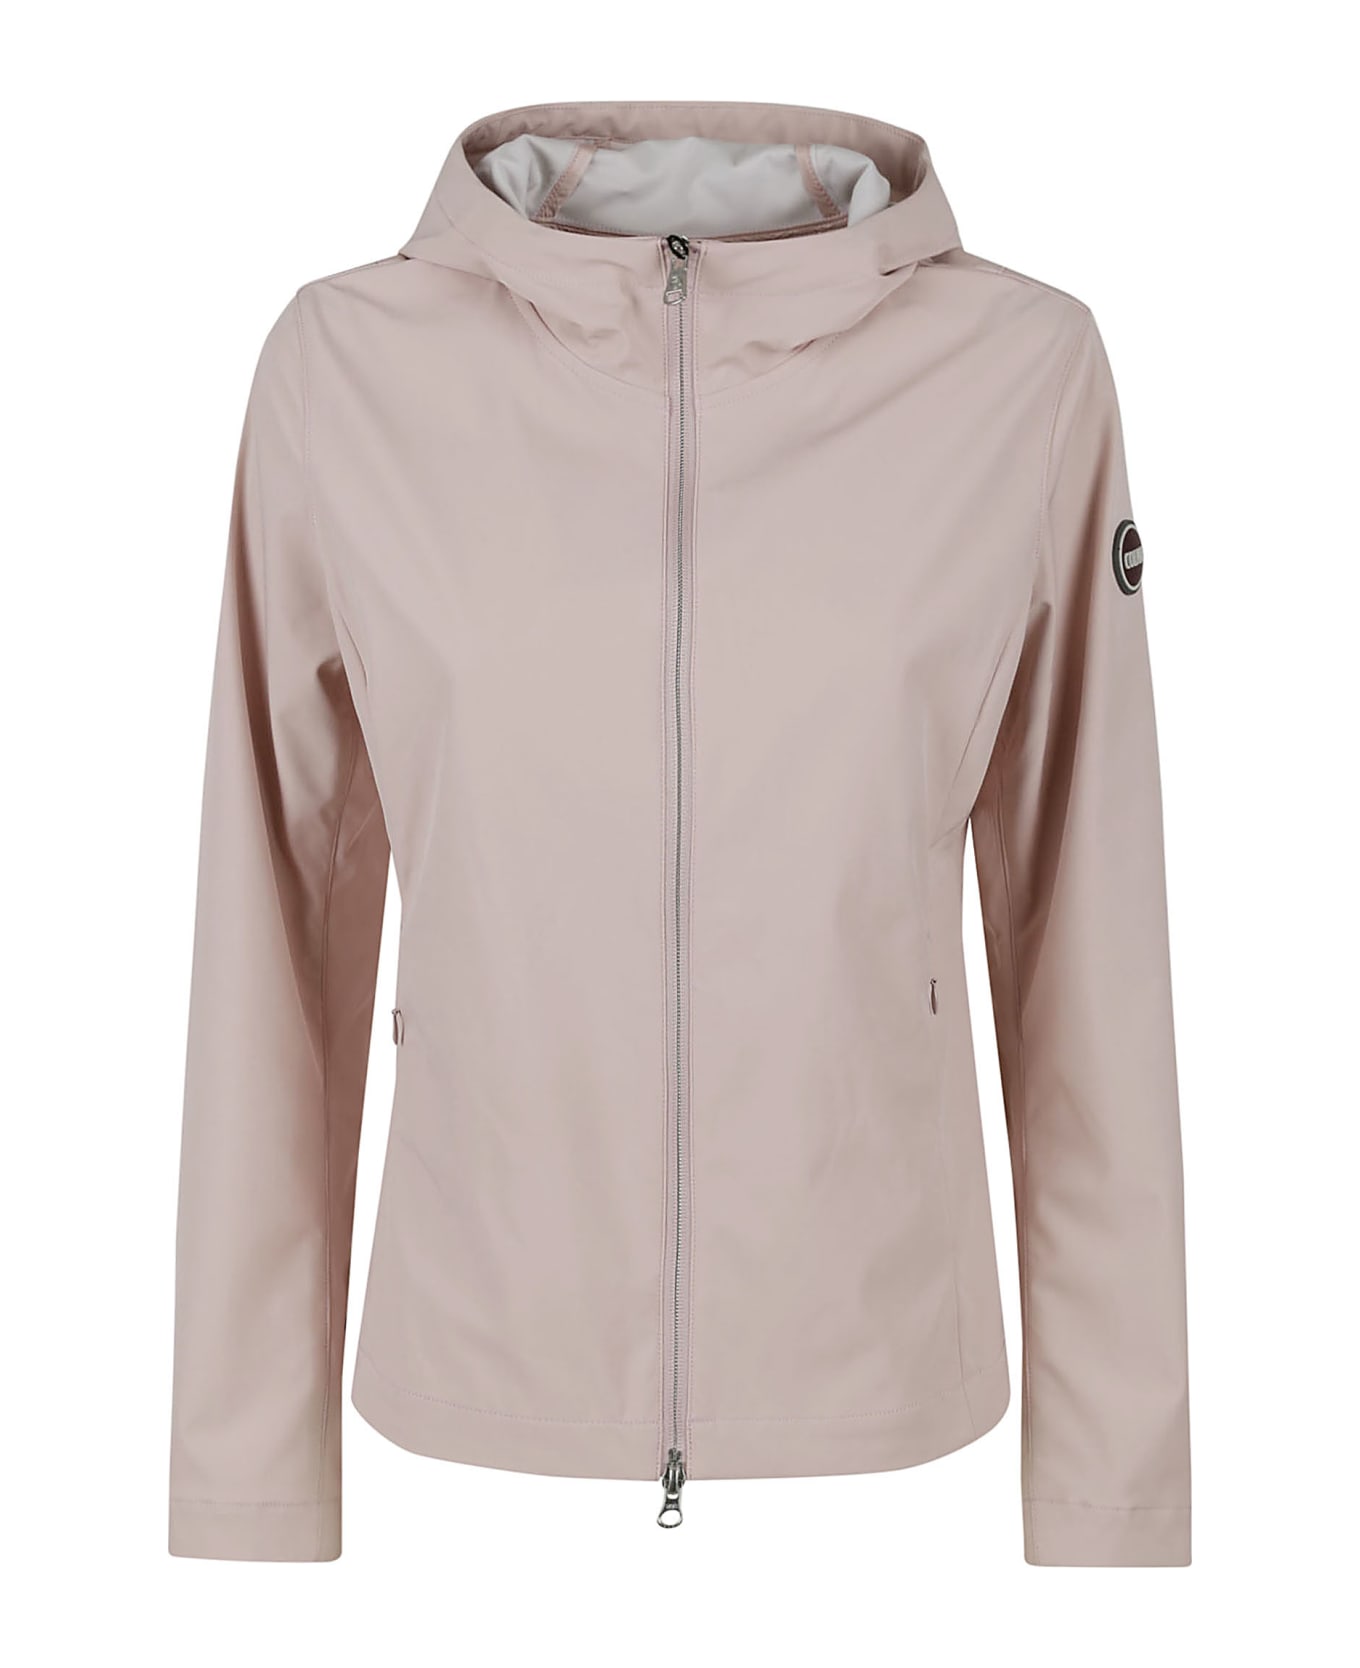 Colmar New Futurity Jacket - Pink ジャケット